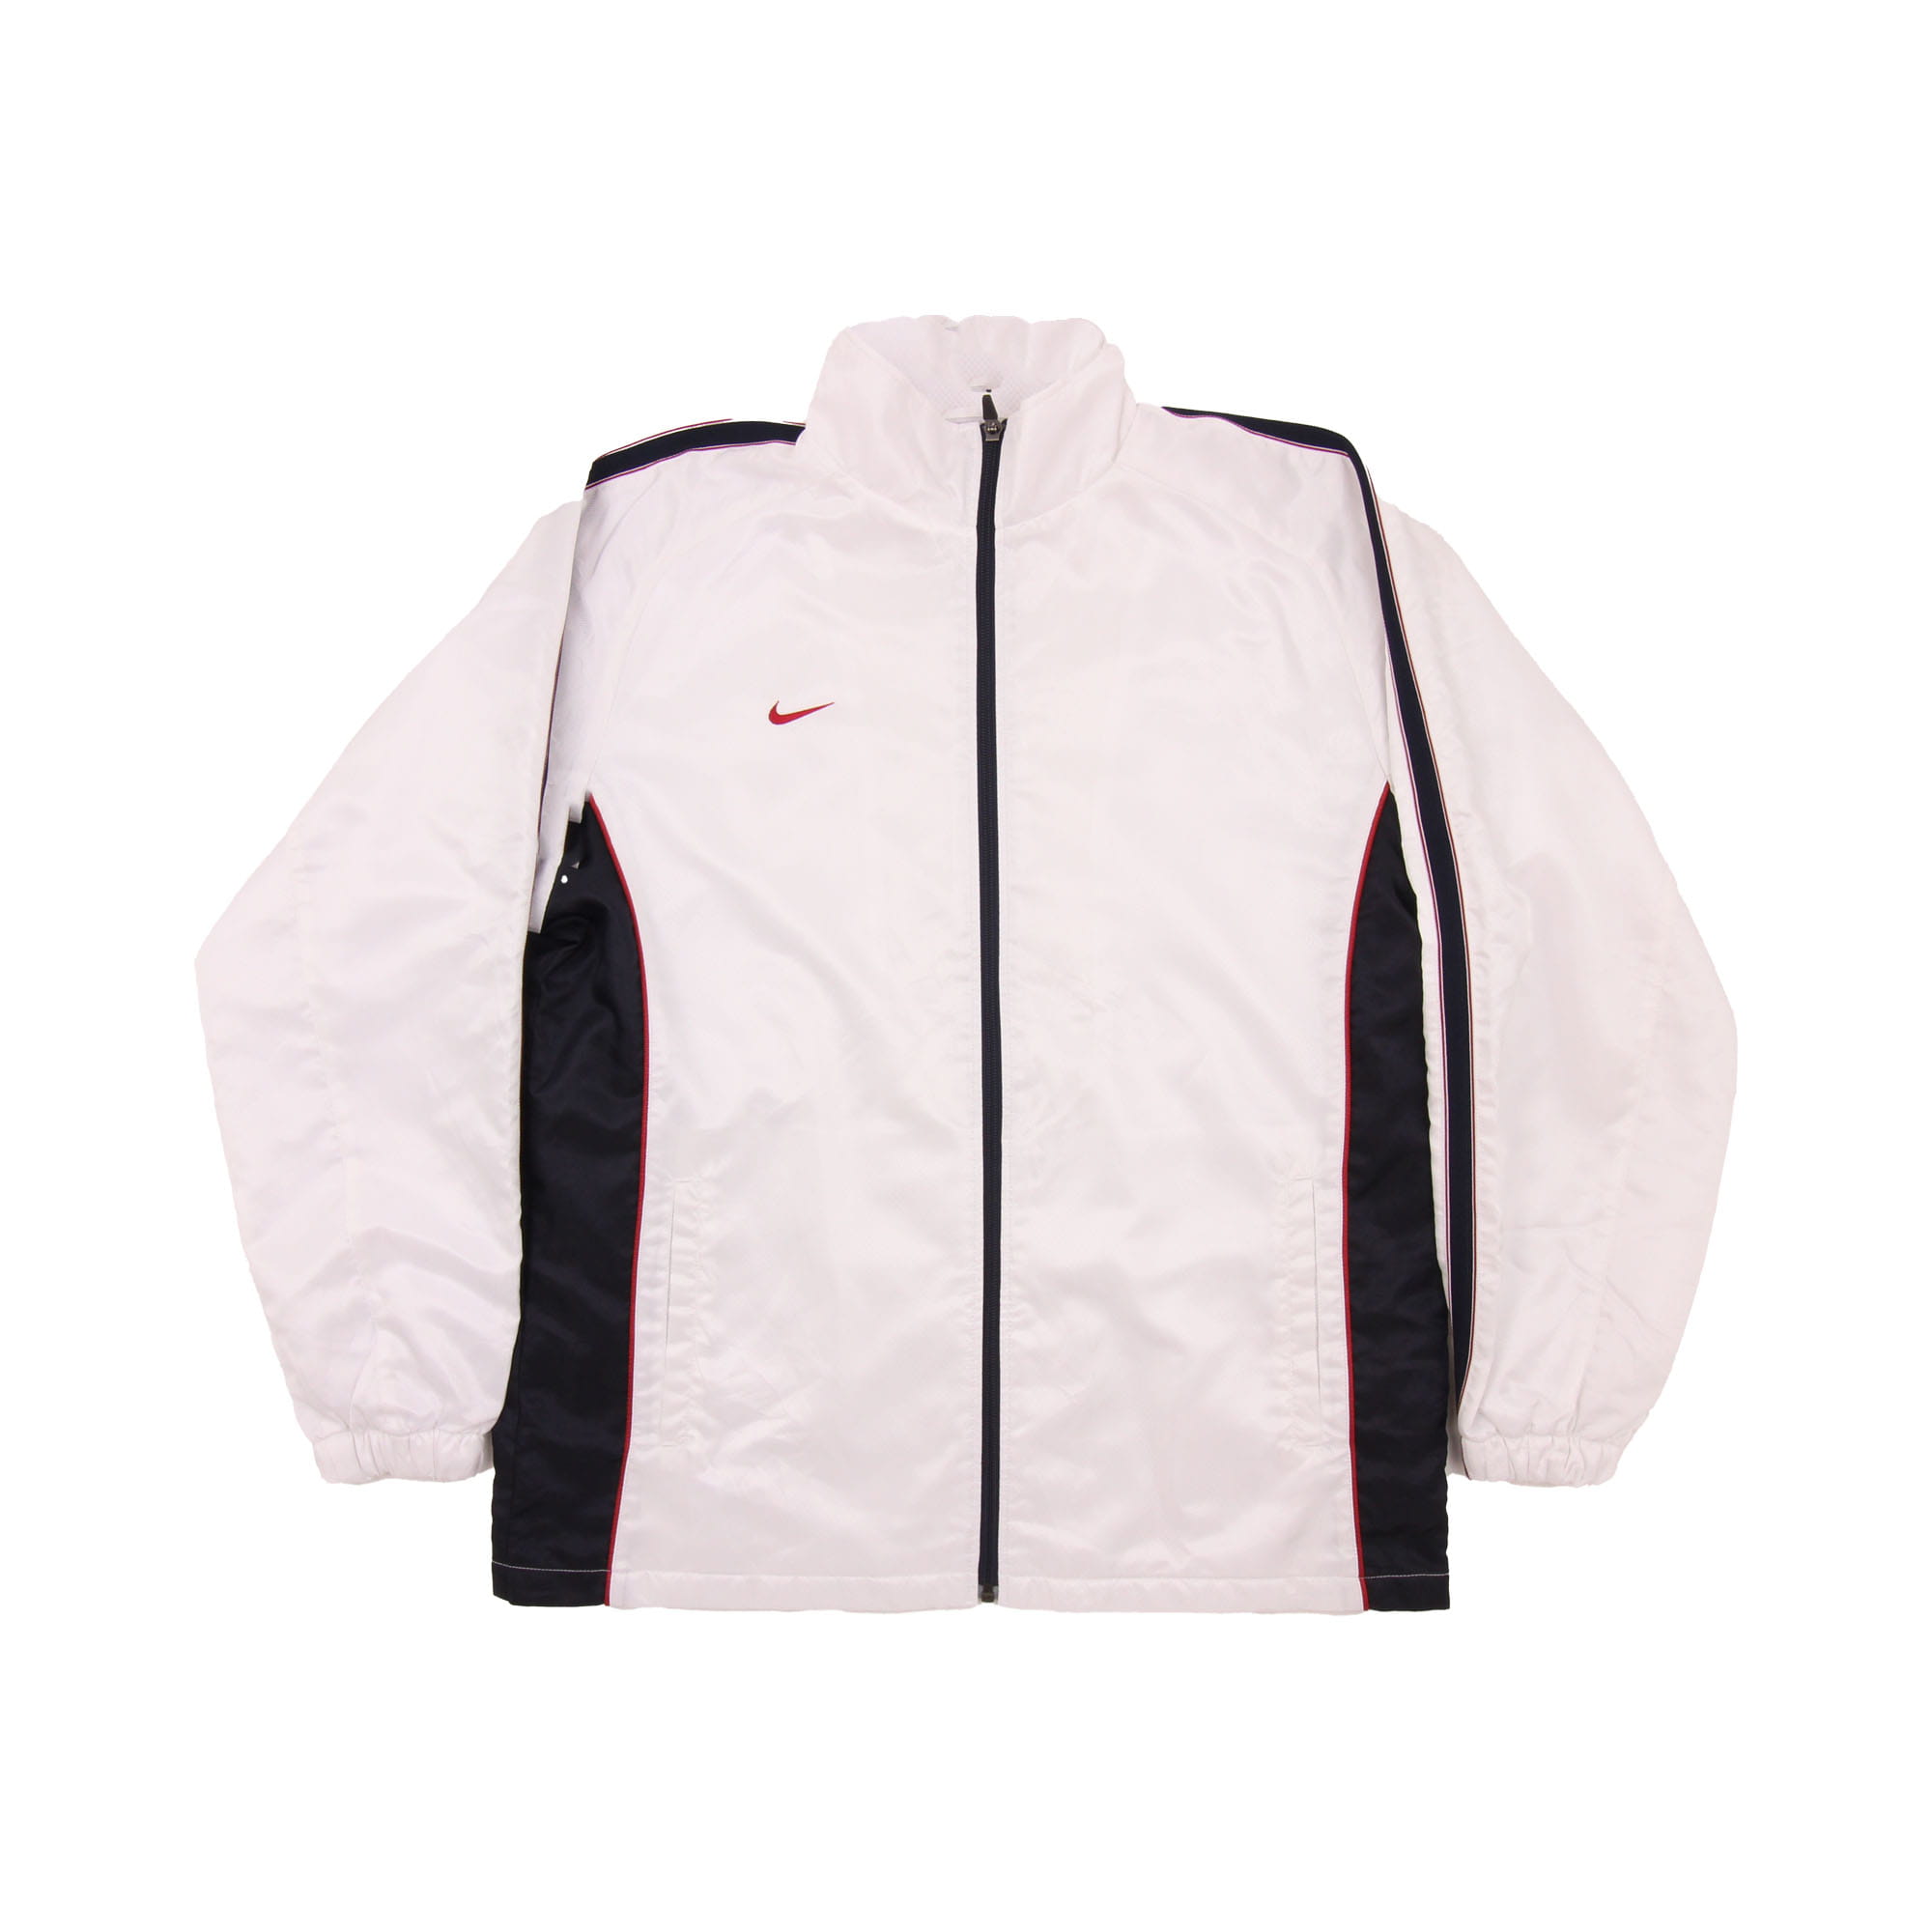 Nike Rain Jacket White -  L